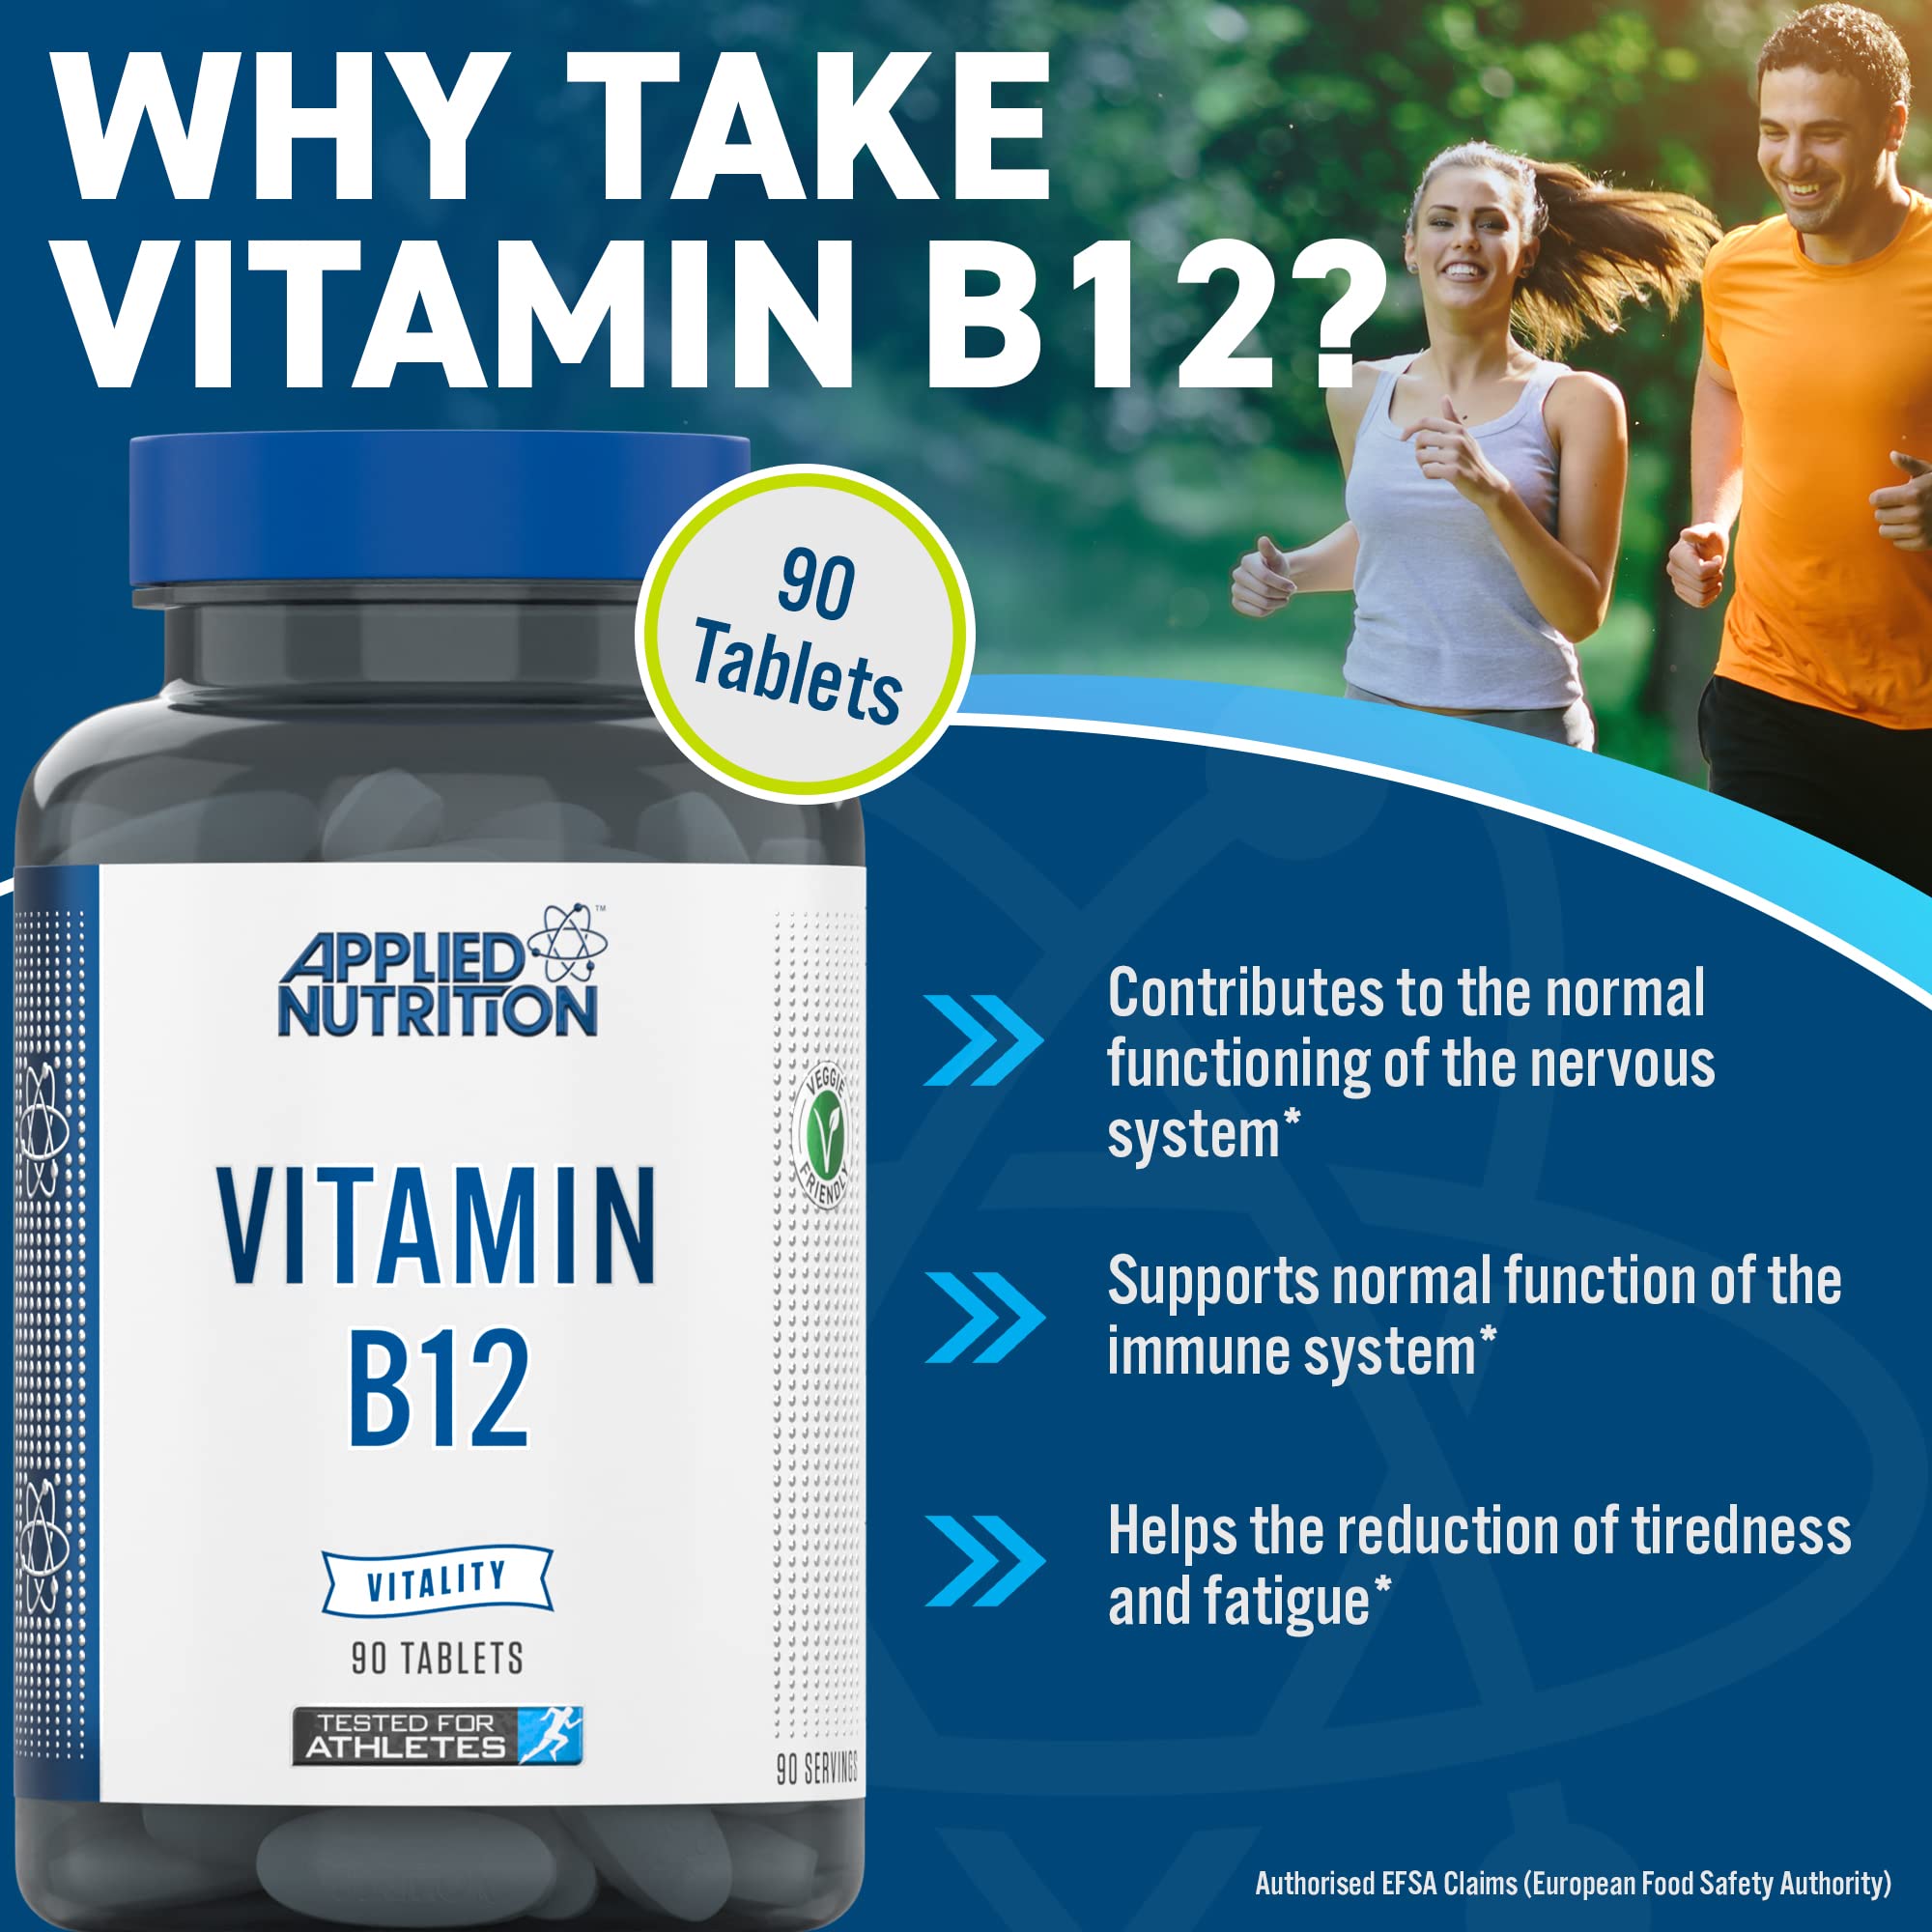 Applied Nutrition Vitamin B12 90 Tabs, 200 g